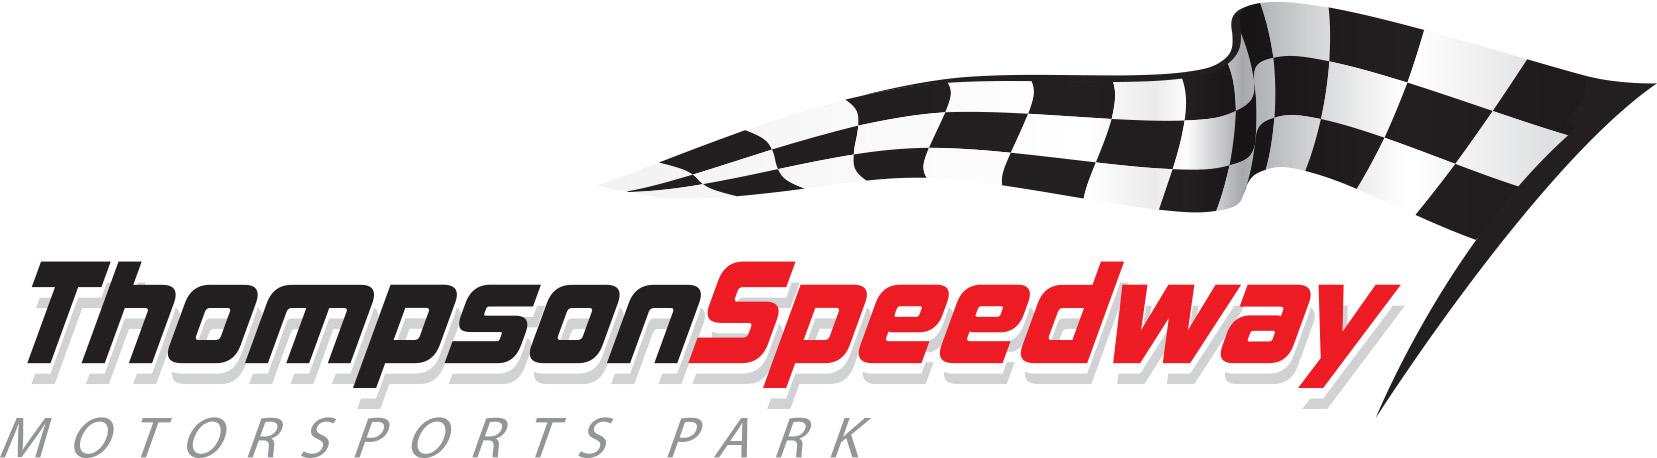 Thompson Speedway Motorsports Park Logo